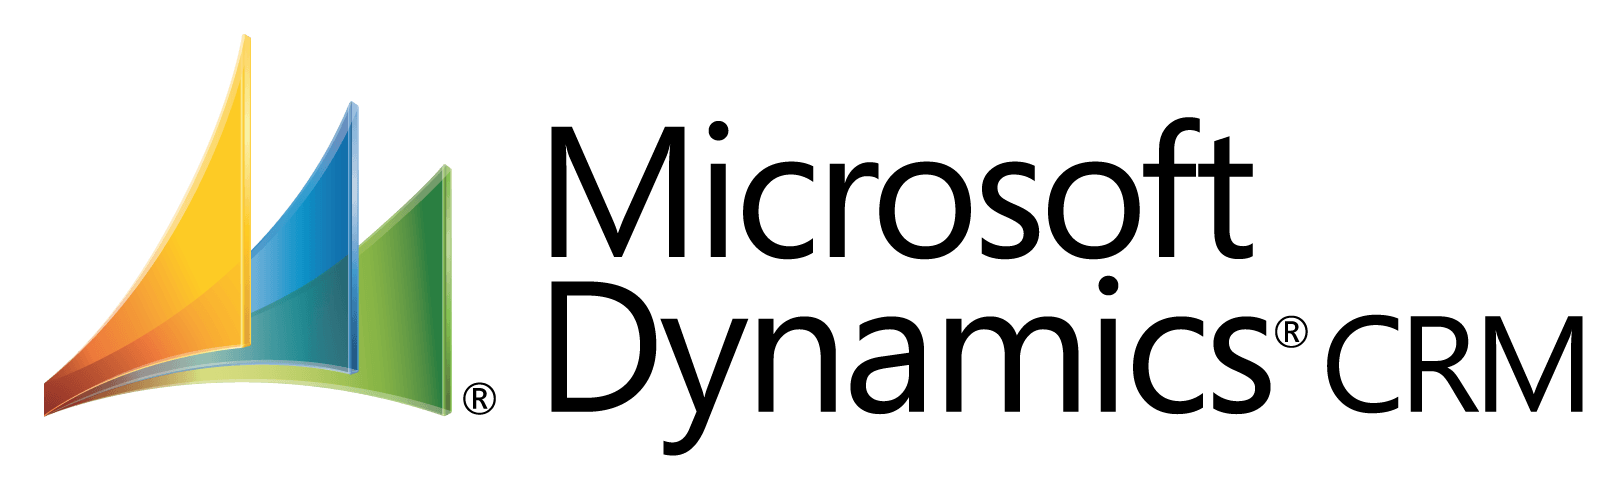 Dynamics CRM 2016 Logo - Image - Dynamics-crm.png | Logopedia | FANDOM powered by Wikia